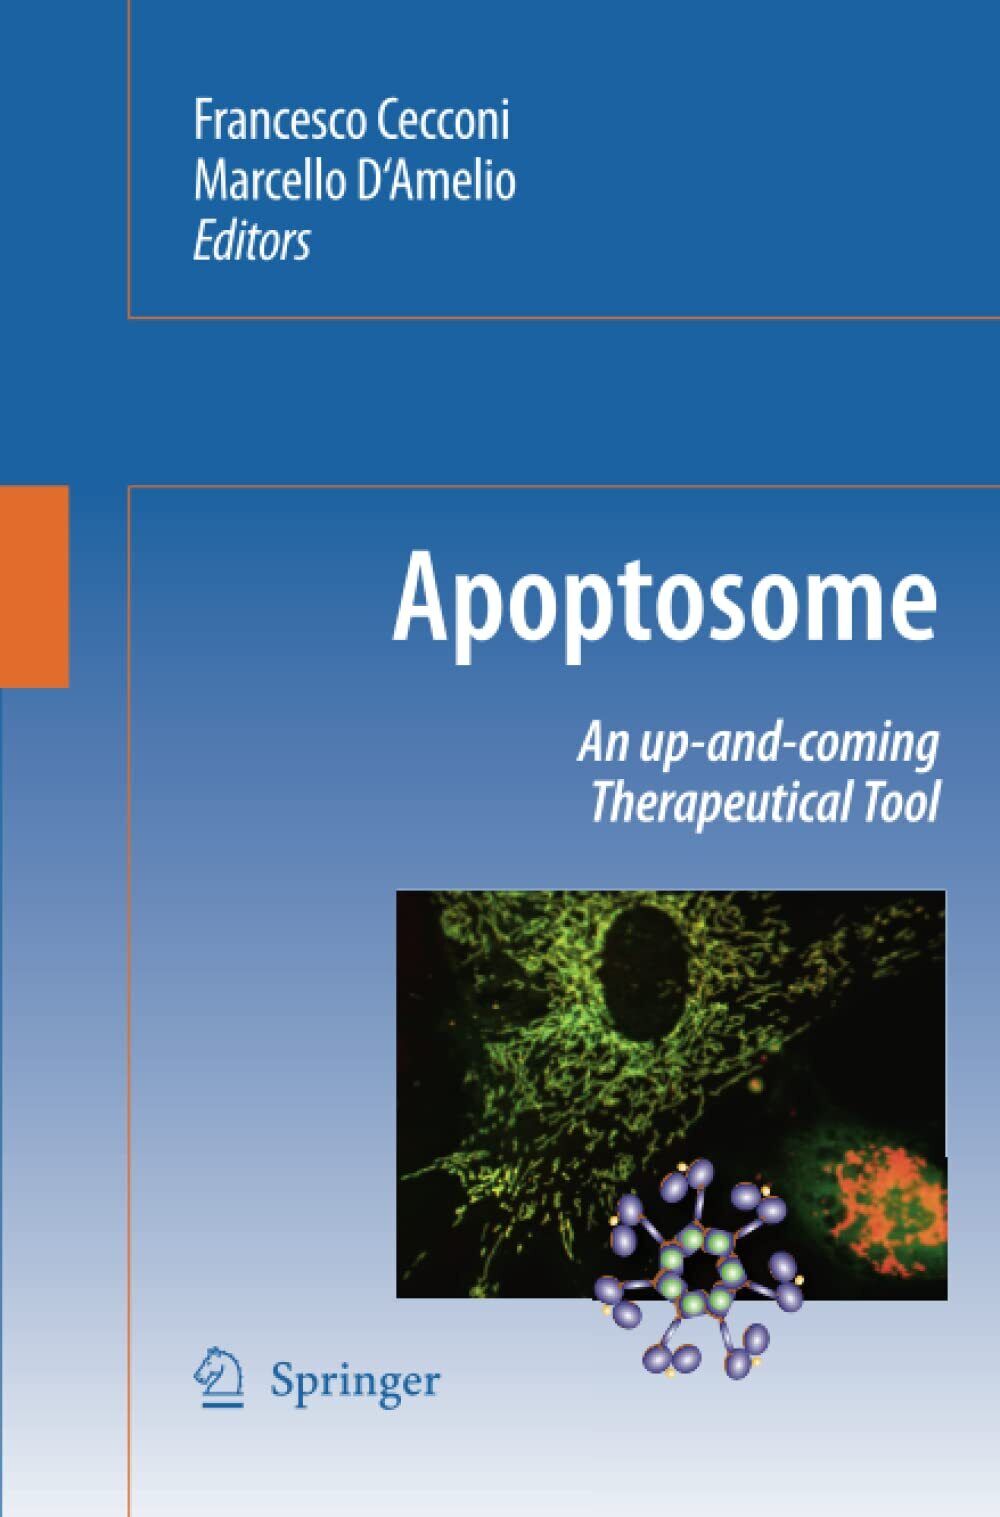 Apoptosome - Francesco Cecconi - Springer, 2014